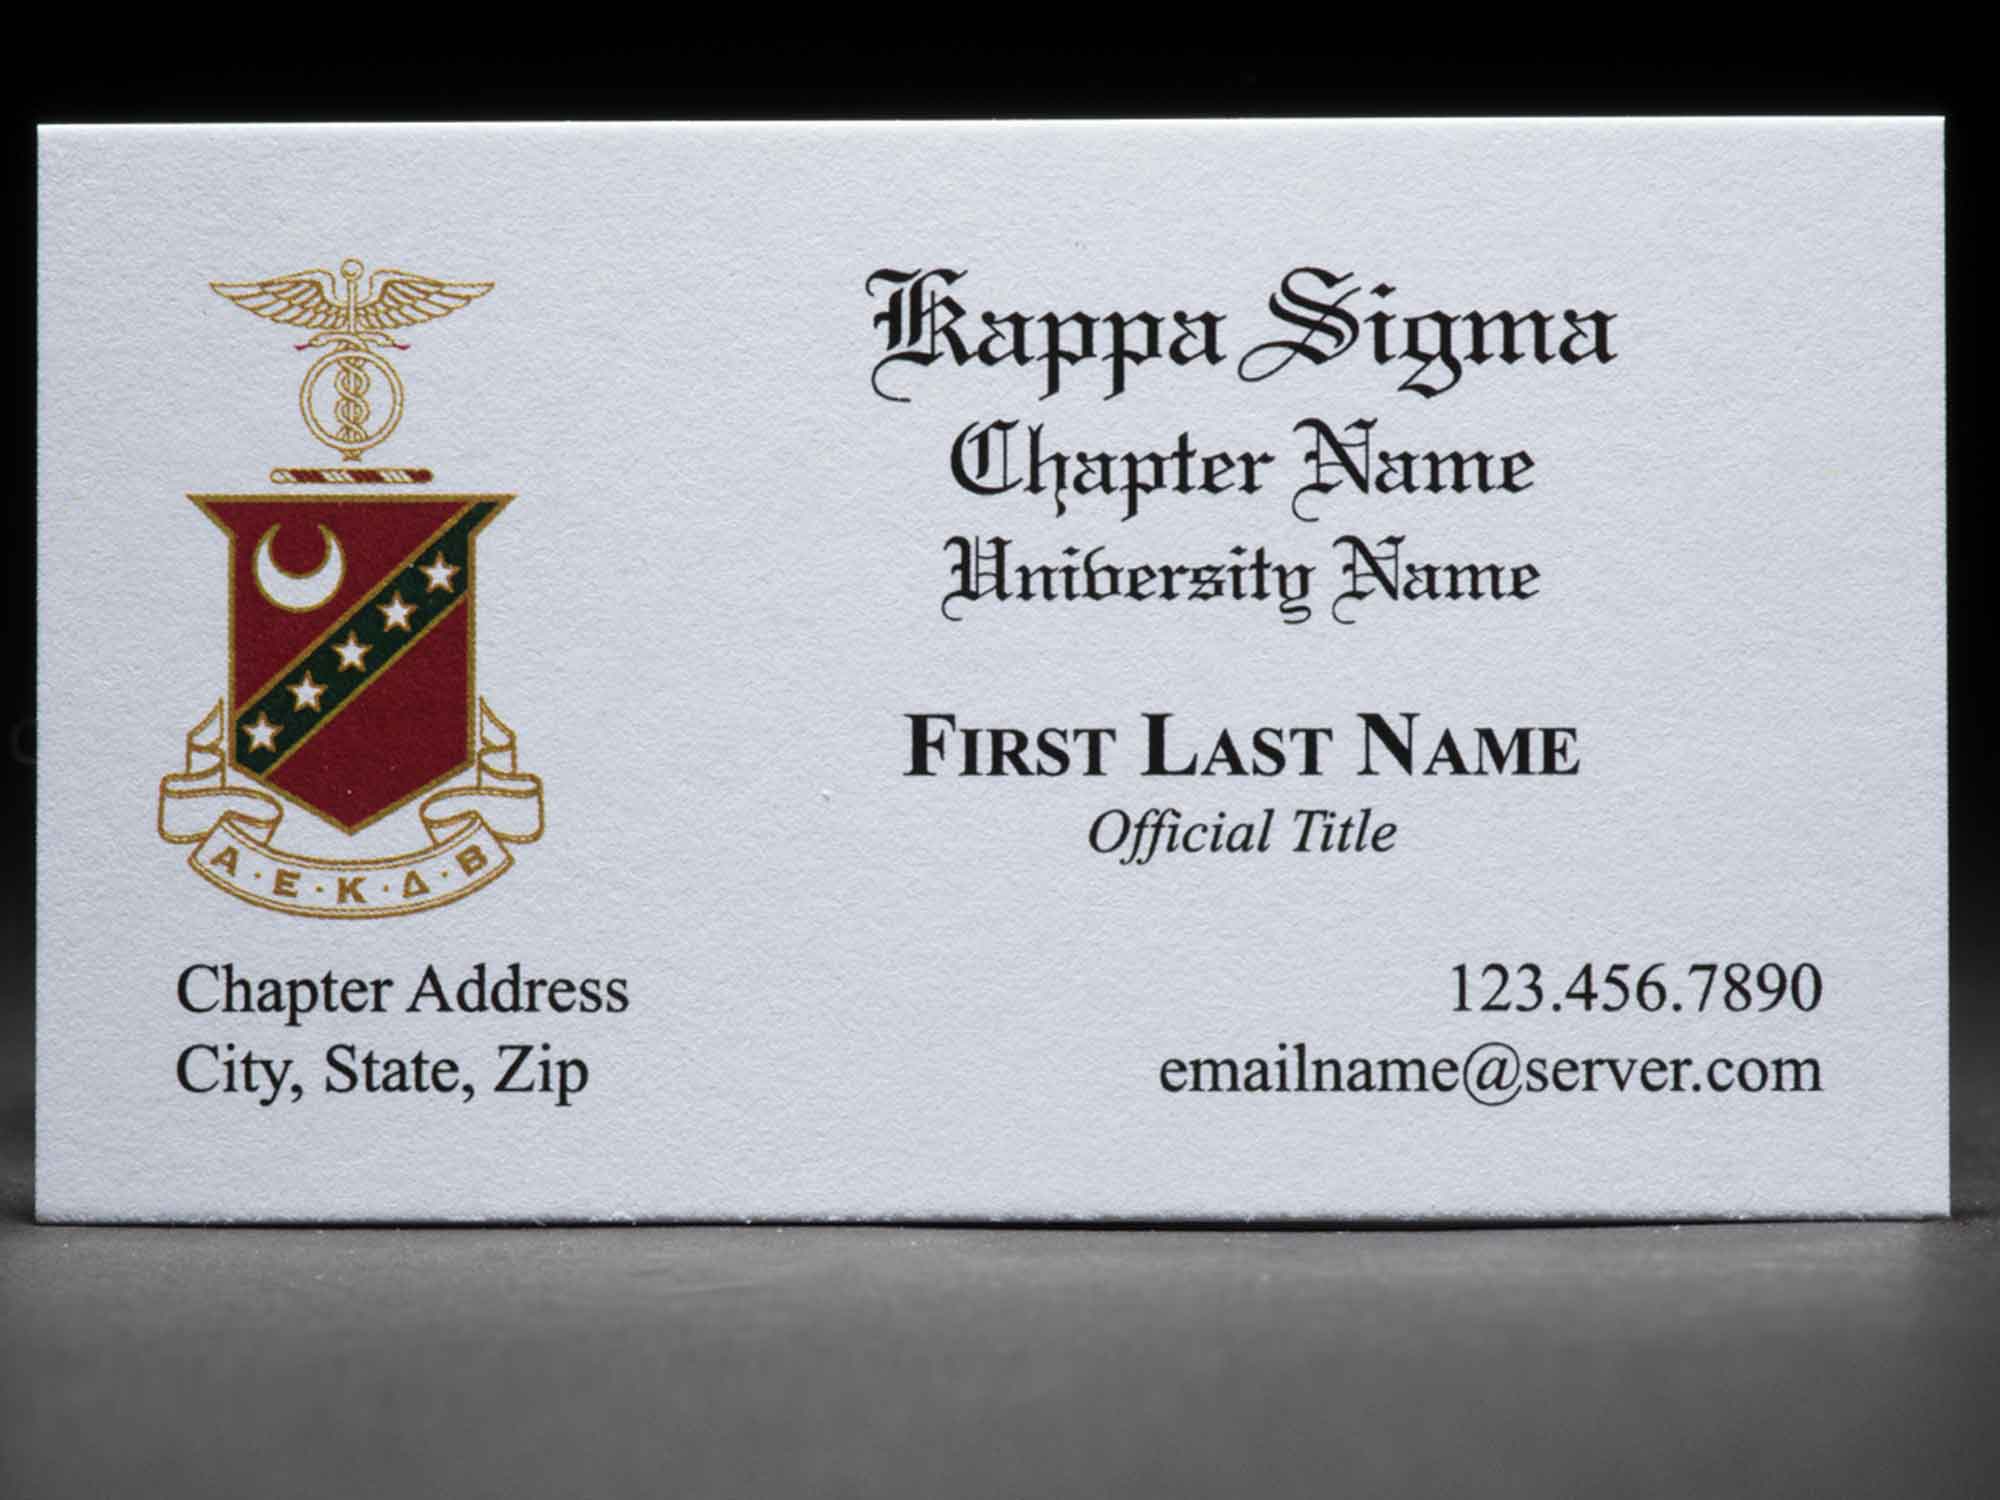 Business Cards Kappa Sigma